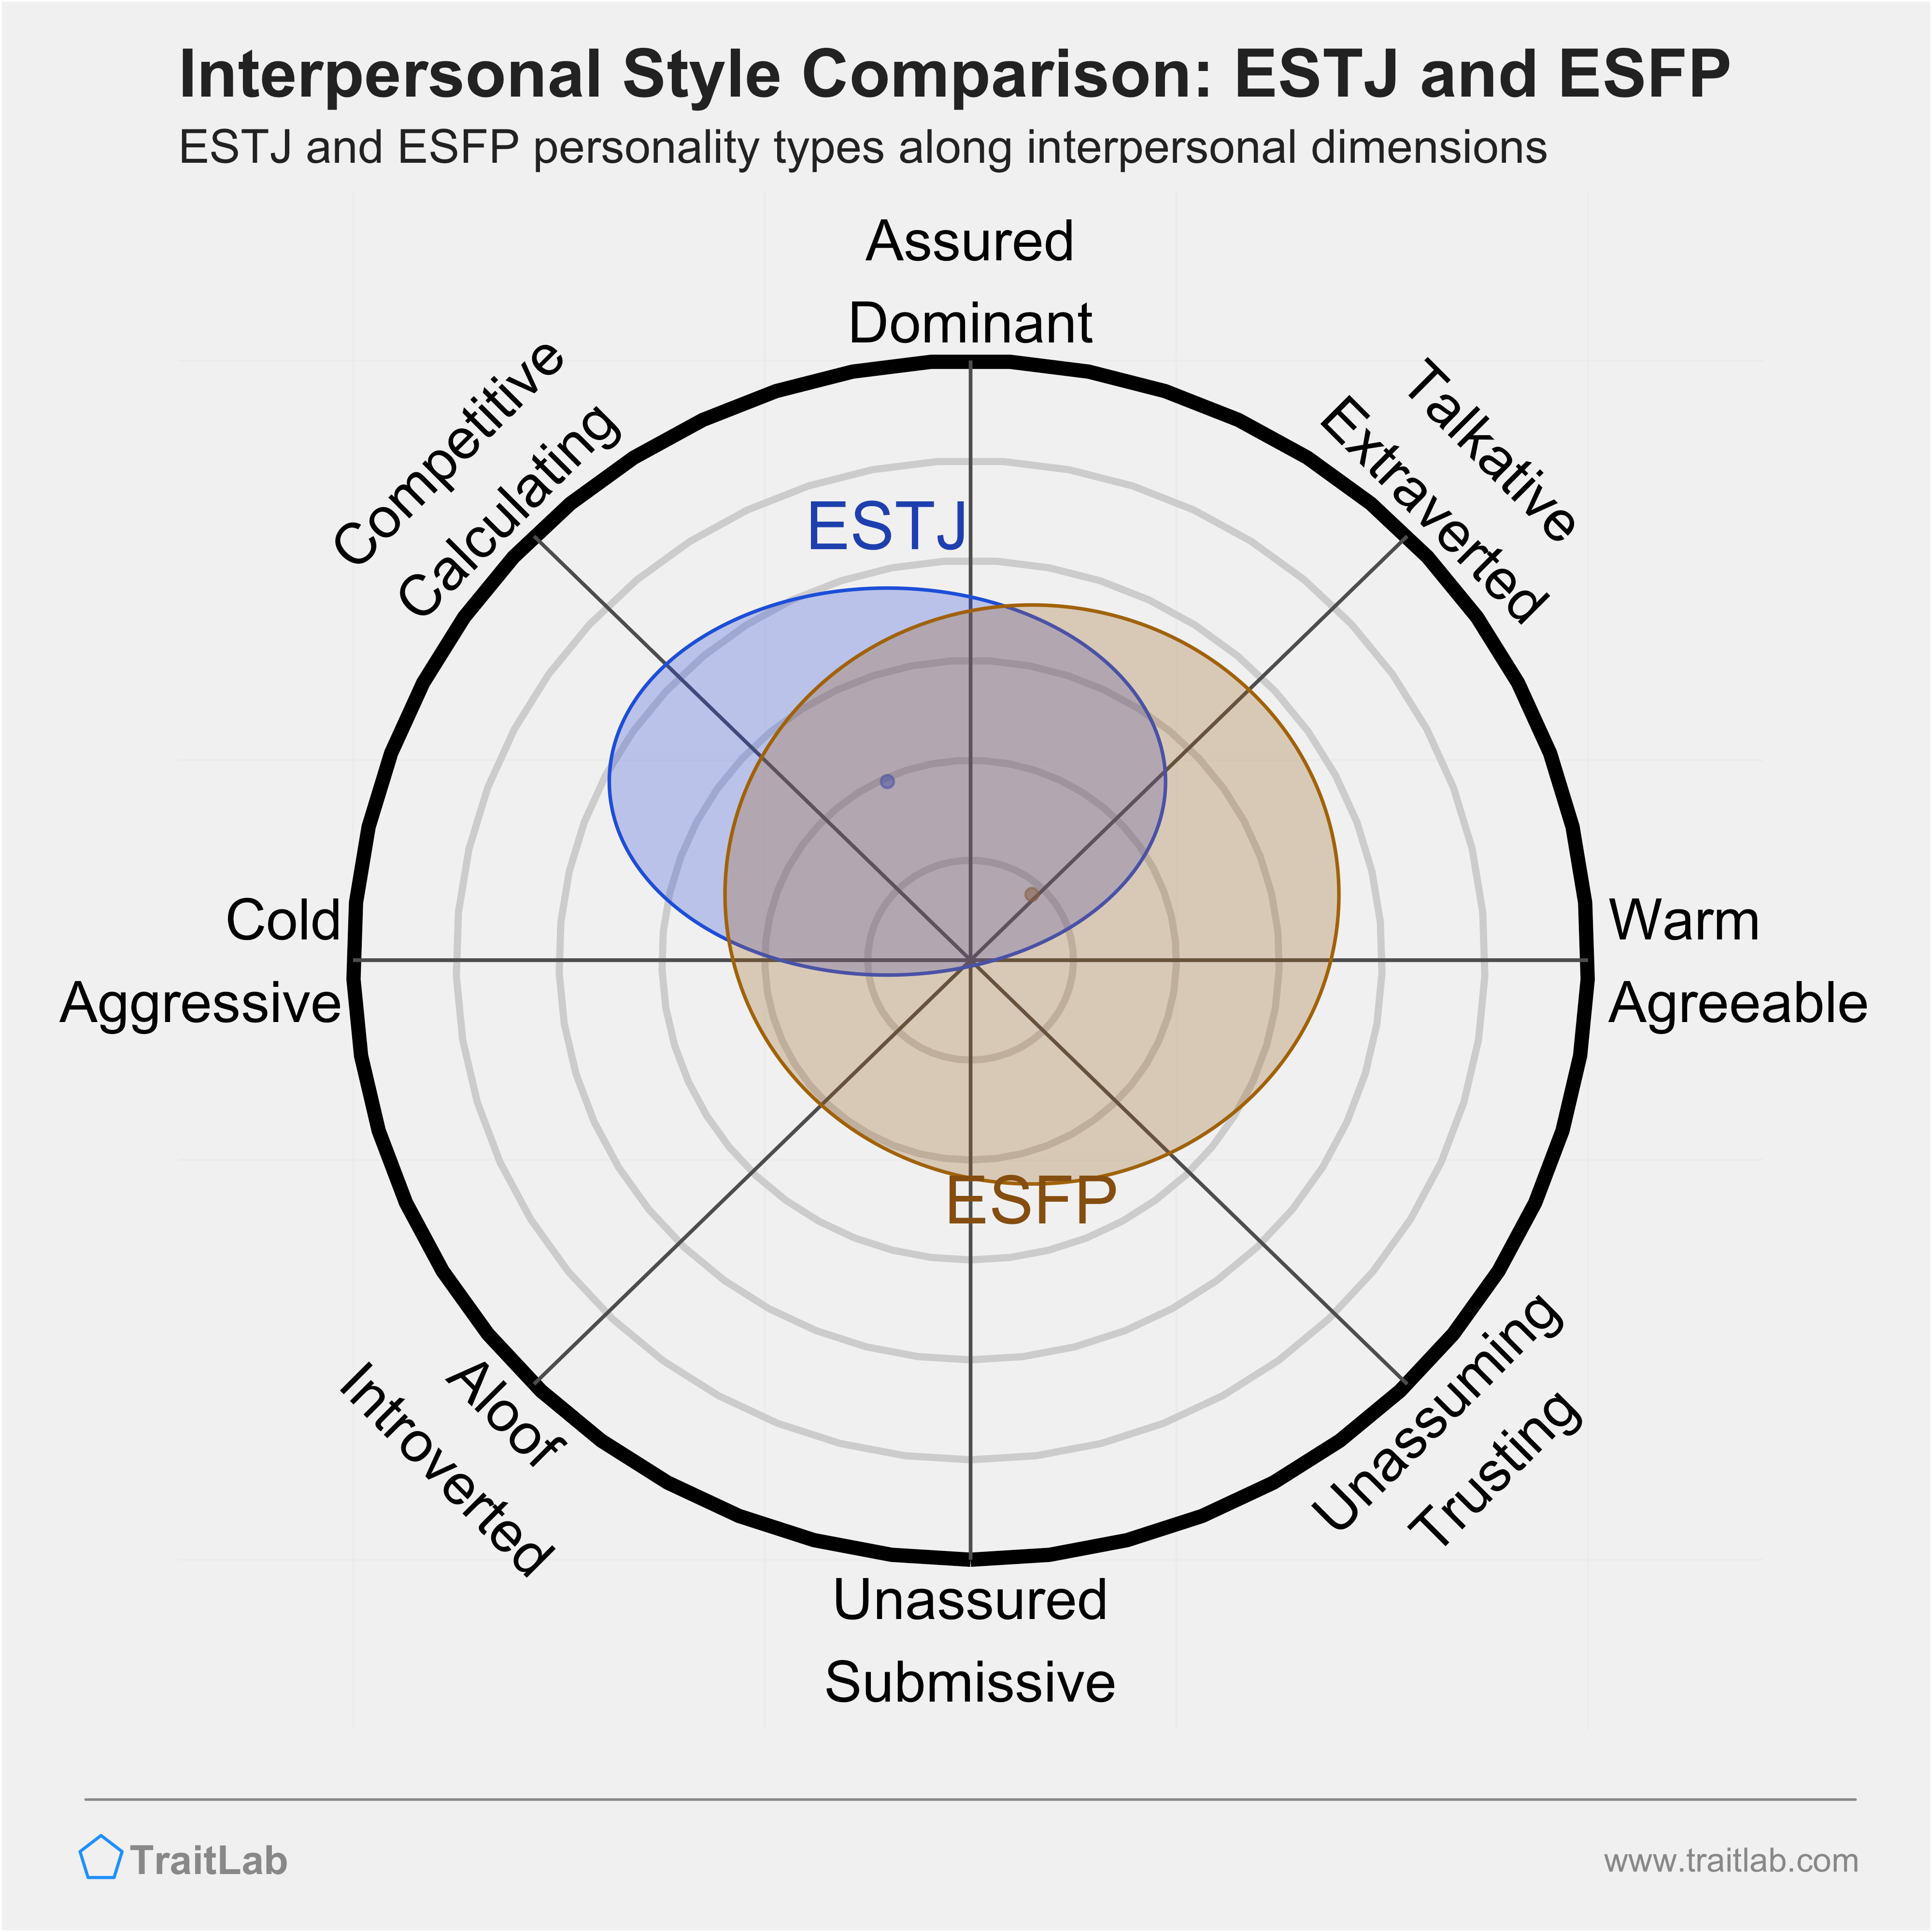 ESTJ and ESFP comparison across interpersonal dimensions